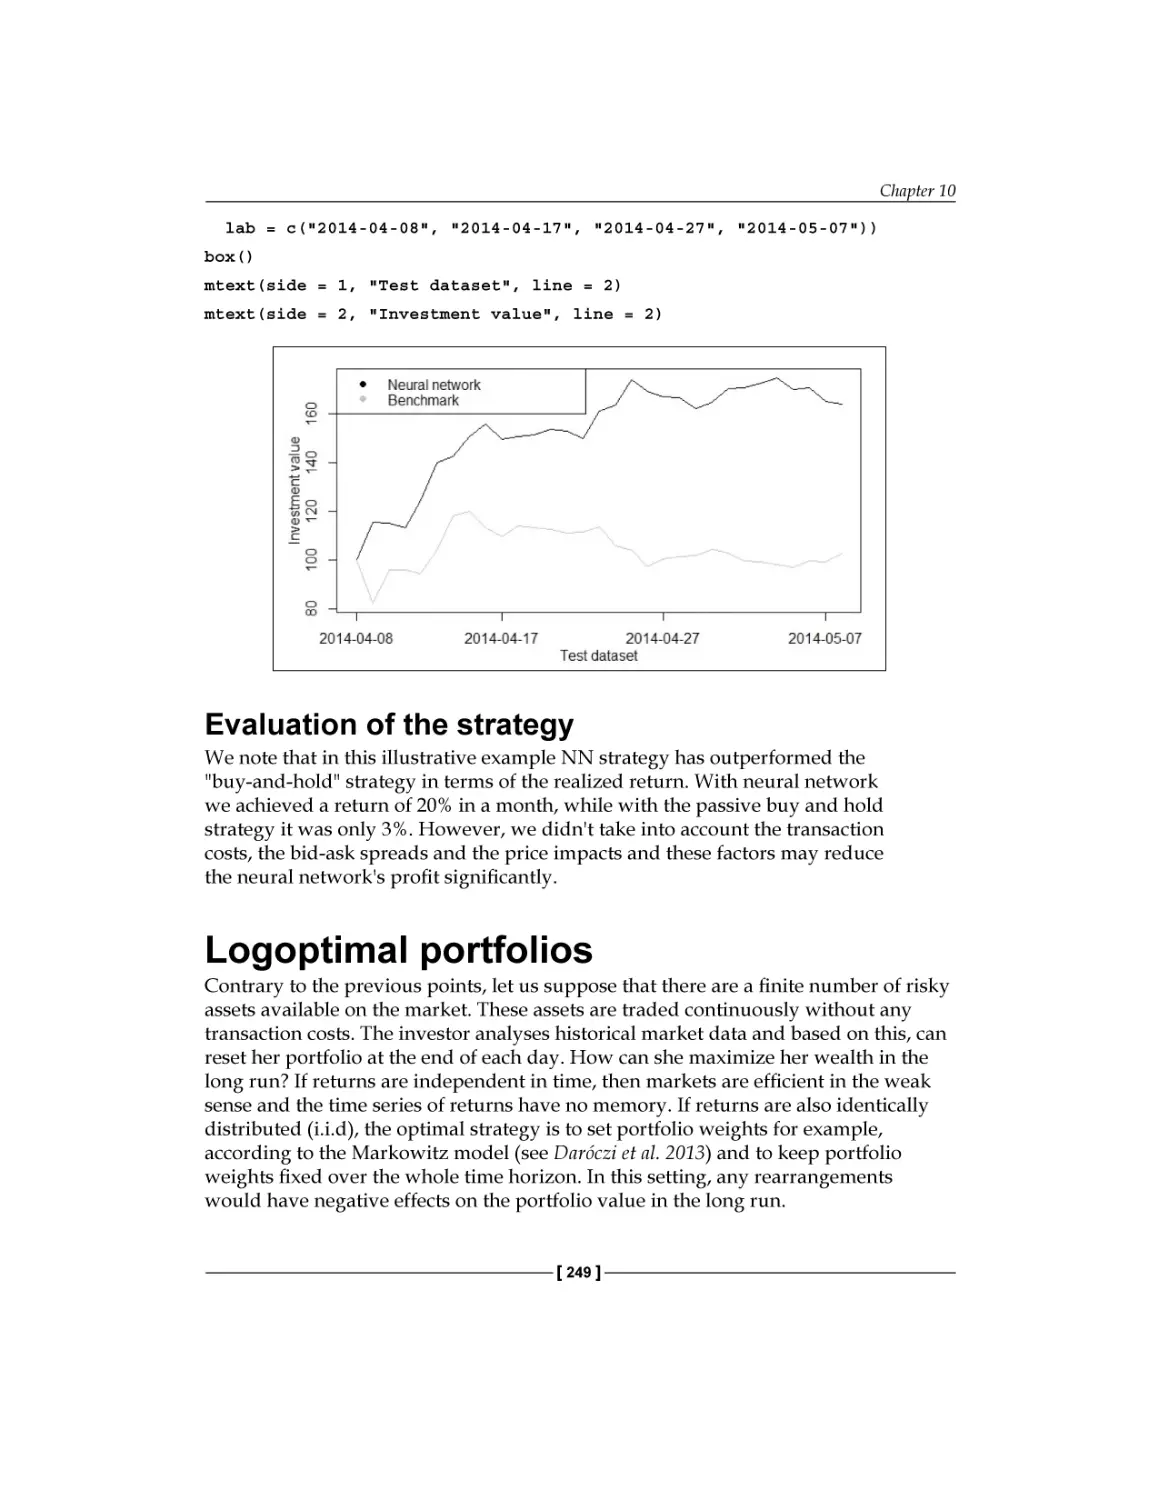 Evaluation of the strategy
Logoptimal portfolios